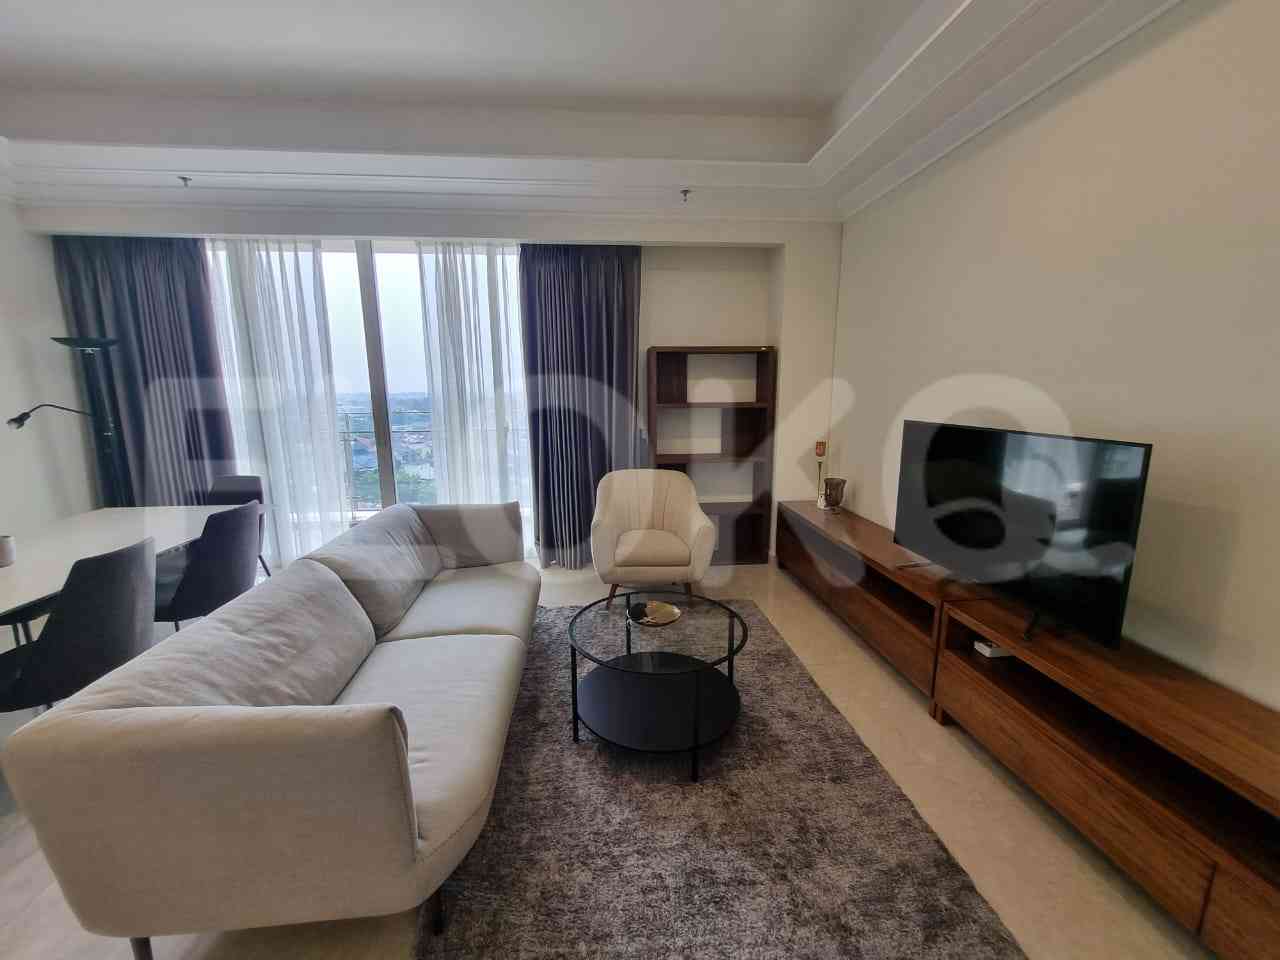 3 Bedroom on 15th Floor for Rent in Pondok Indah Residence - fpo449 1